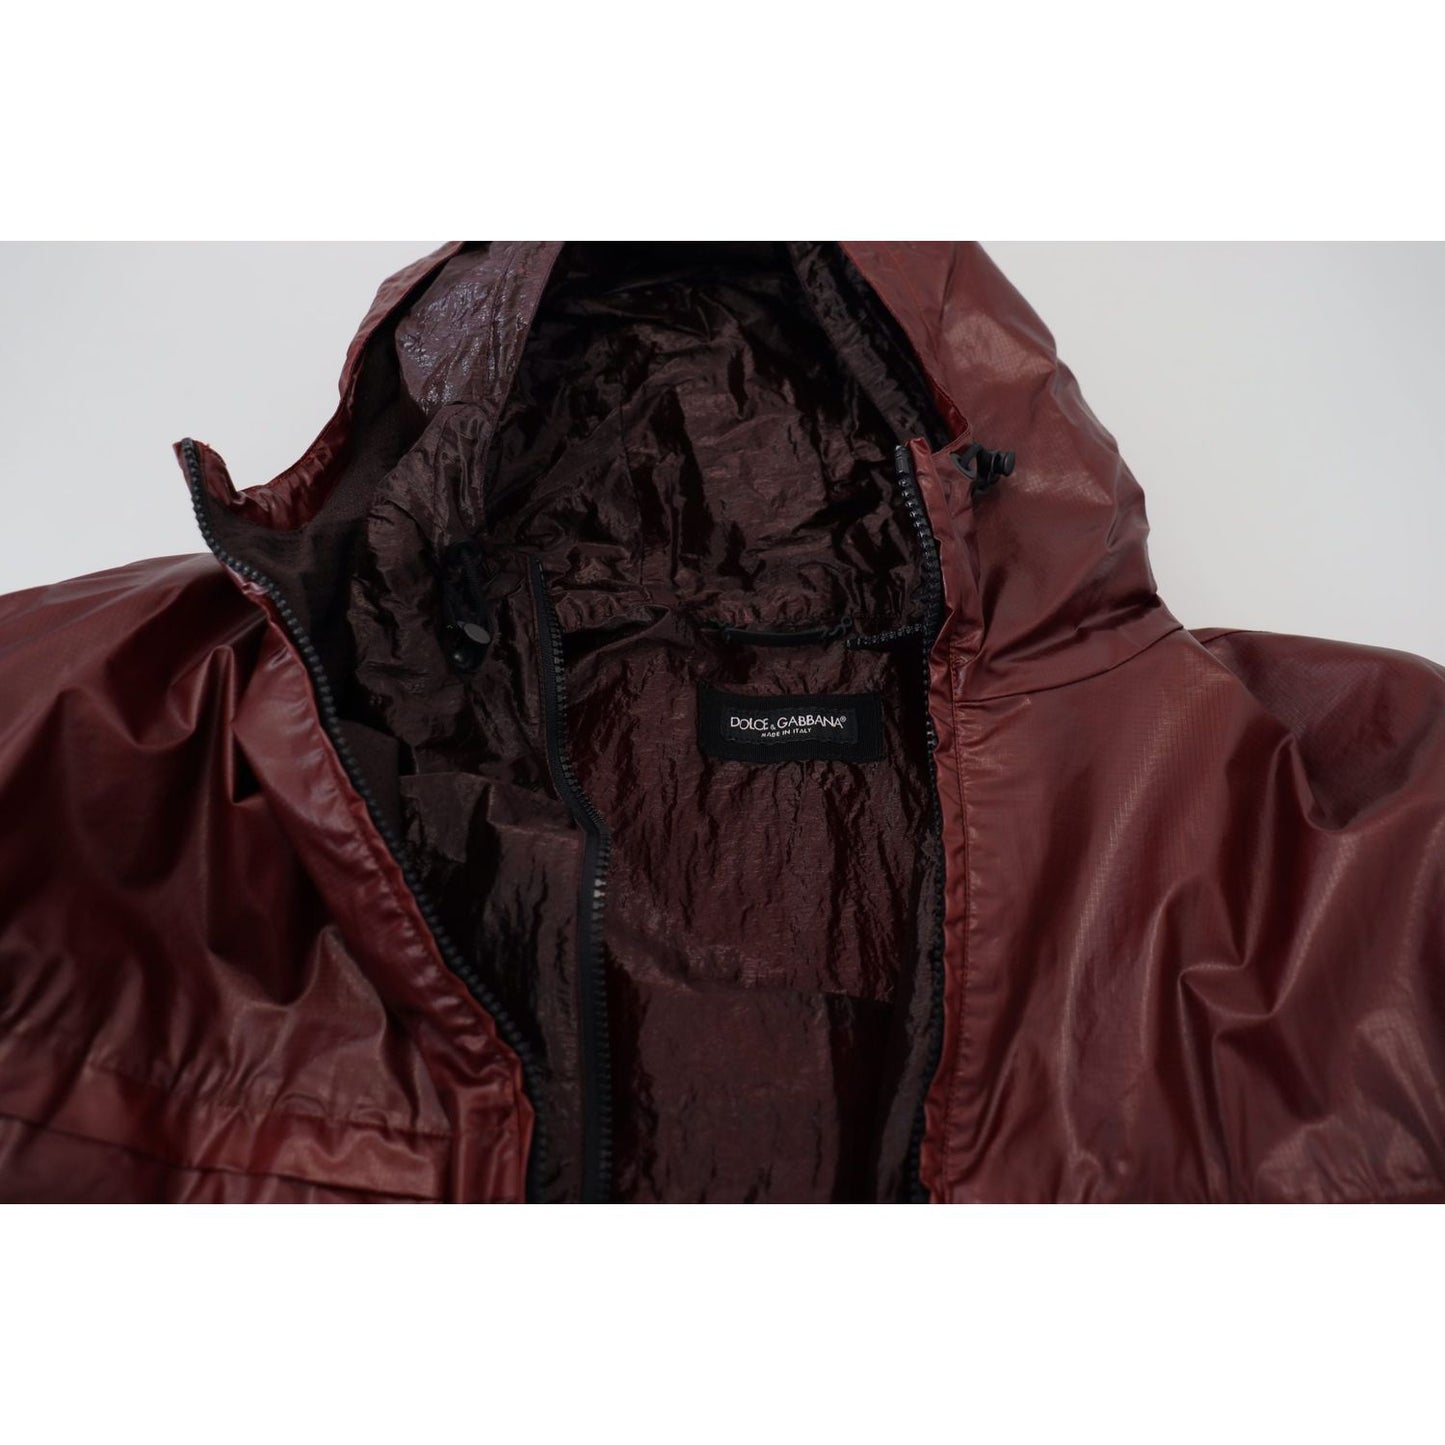 Dolce & Gabbana Elegant Bordeaux Full Zip Hooded Jacket bordeaux-cotton-hooded-full-zip-jacket IMG_8240-scaled-8516a304-2cf.jpg